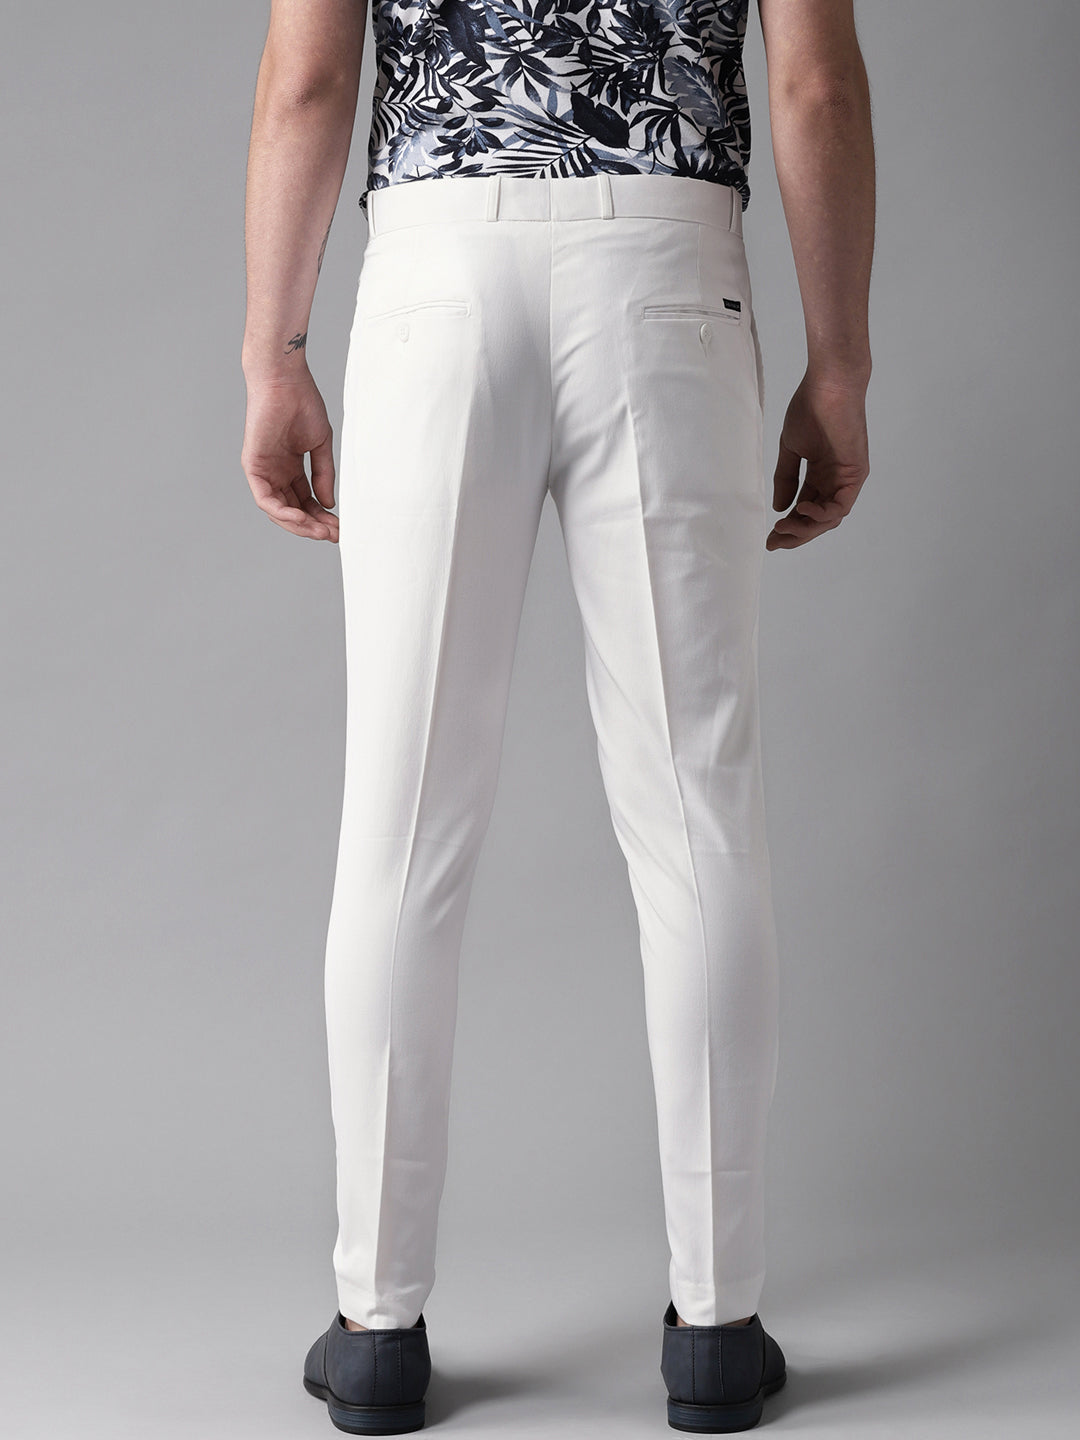 Women's White Trousers | M&S